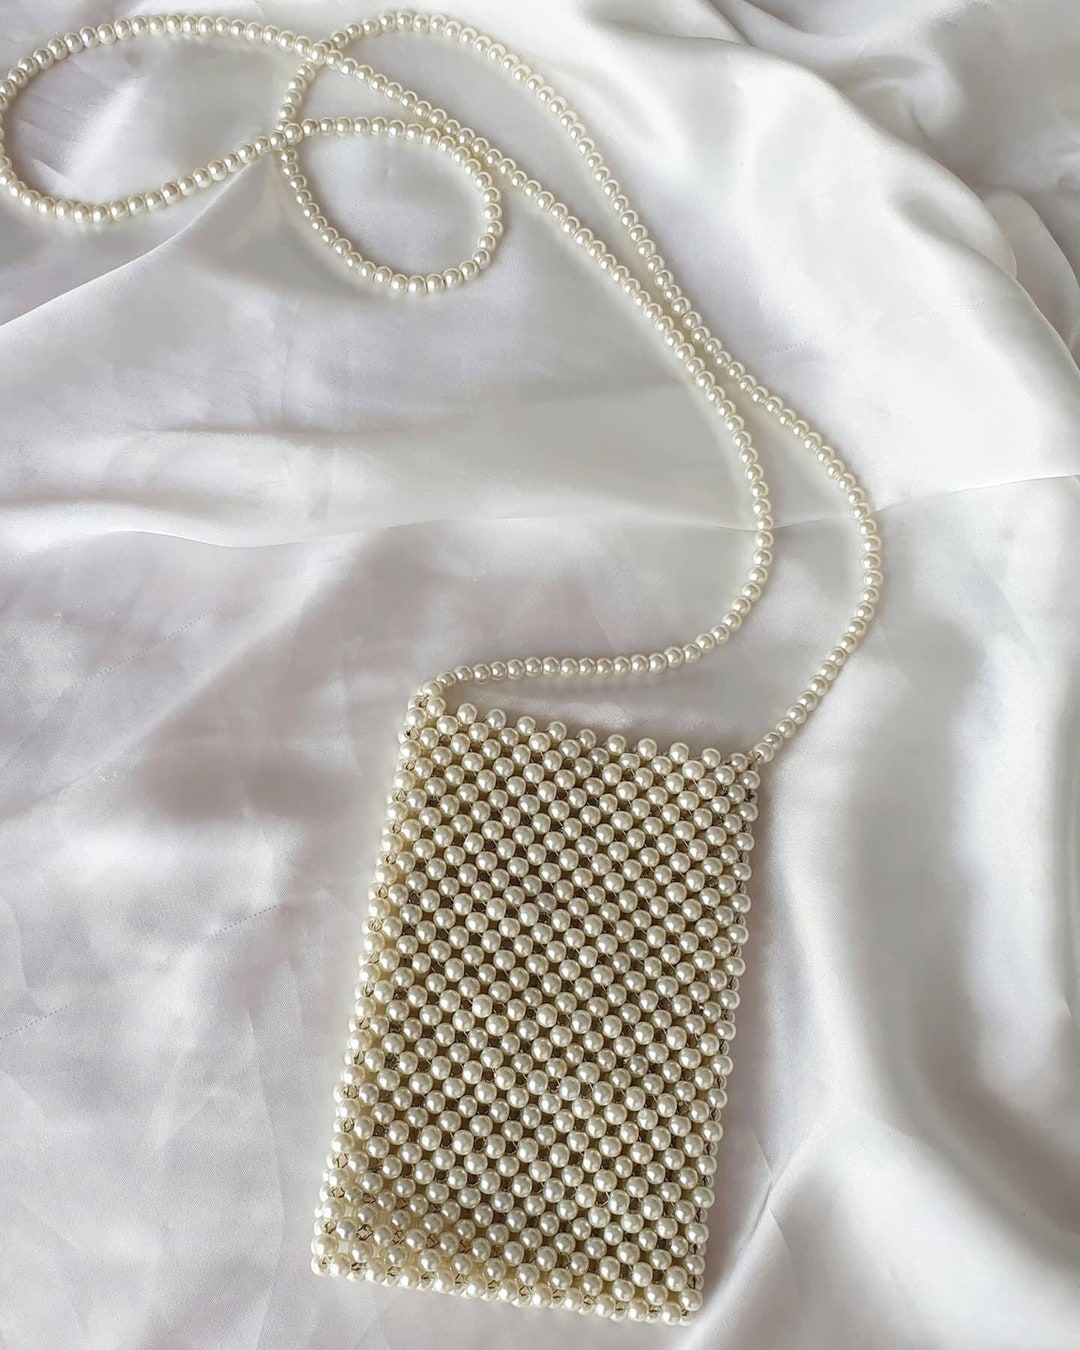 Women's Rectangular Crossbody Bag - Gold Chain Strap / Pearl Key Fob / White